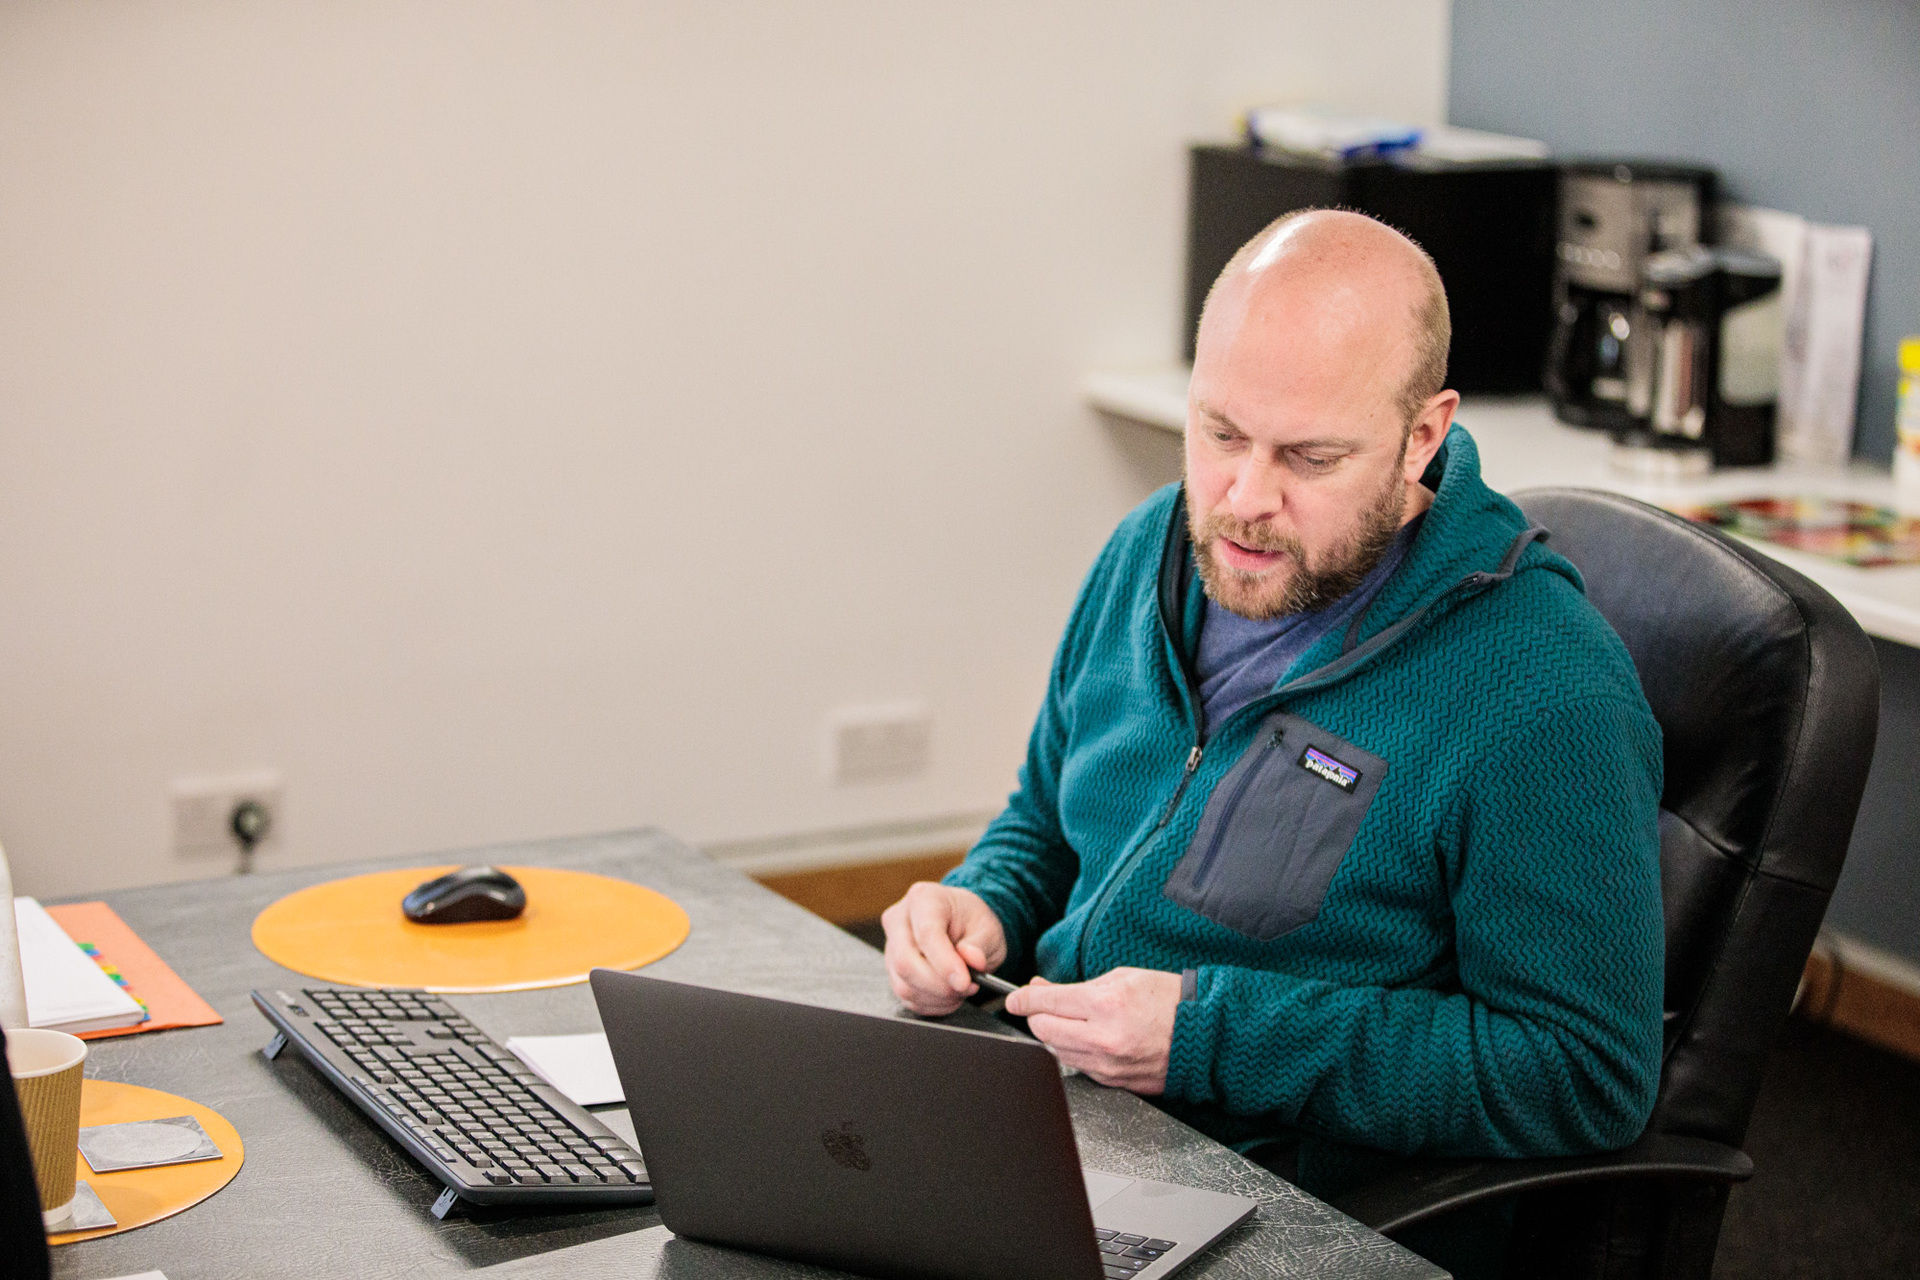 A digital marketing manager sat at his desk, looking at a laptop